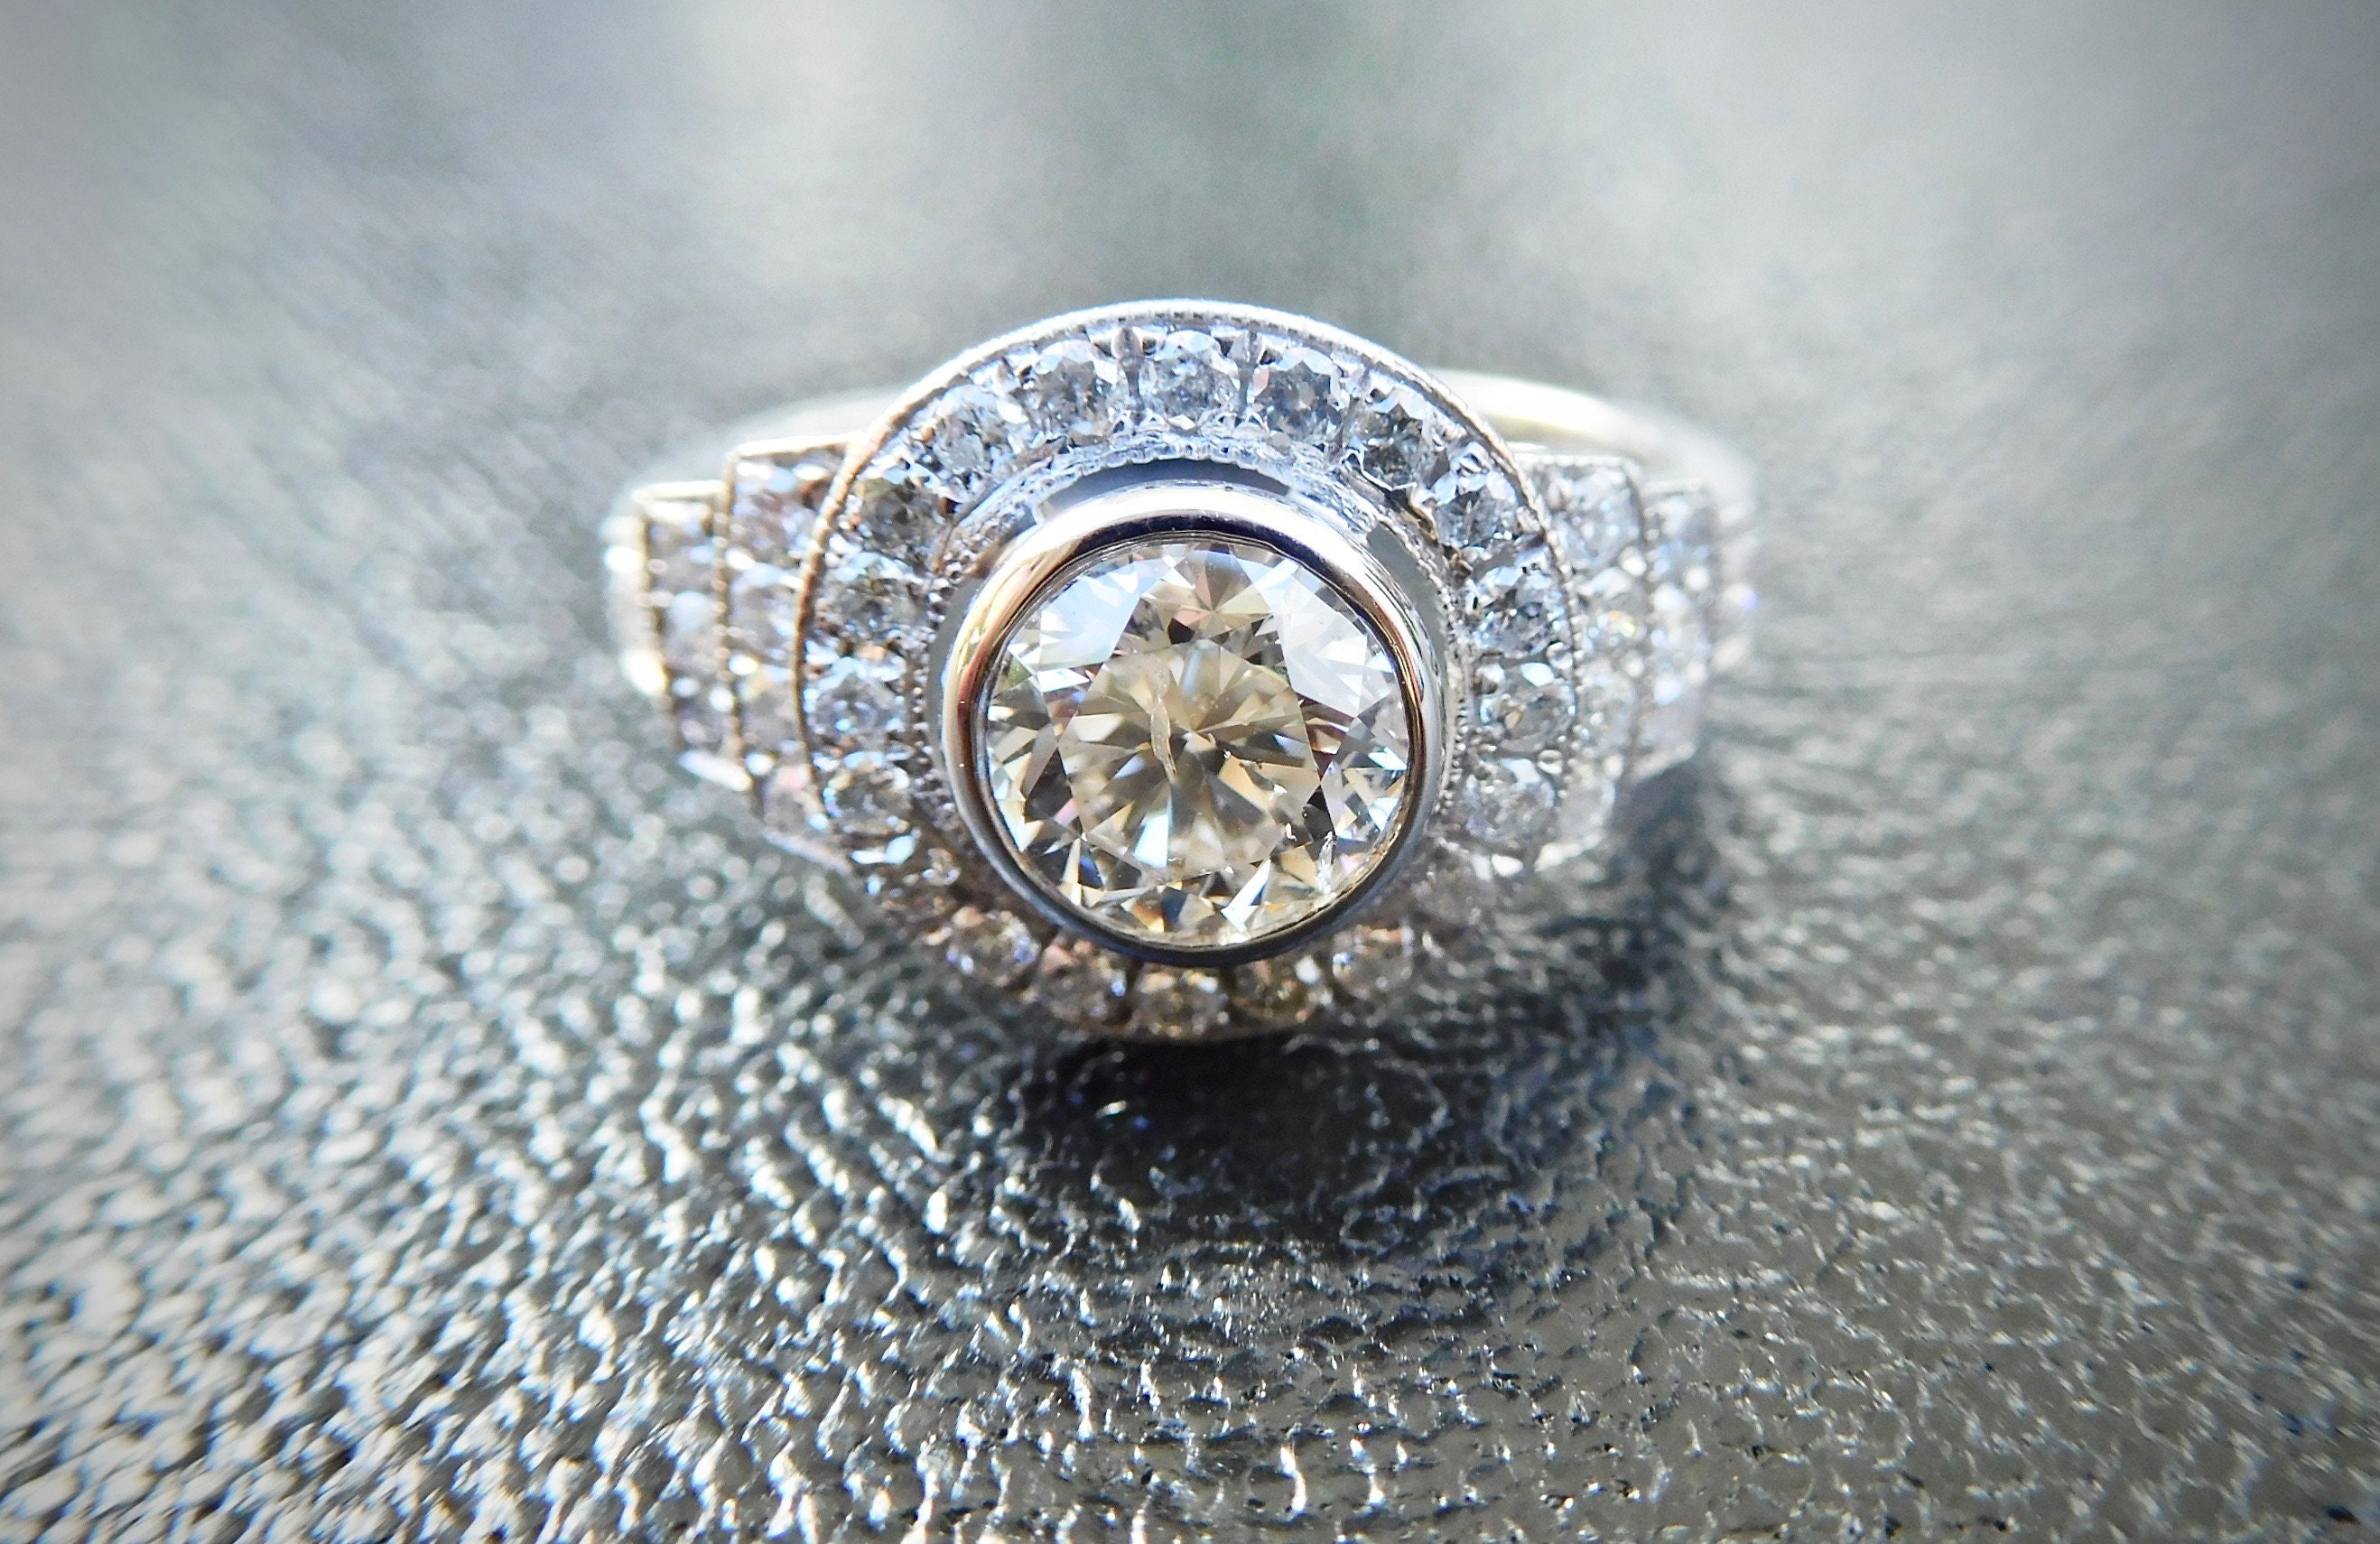 Art Deco Style Diamond Engagement Ring, 1920s, antique, vintage style